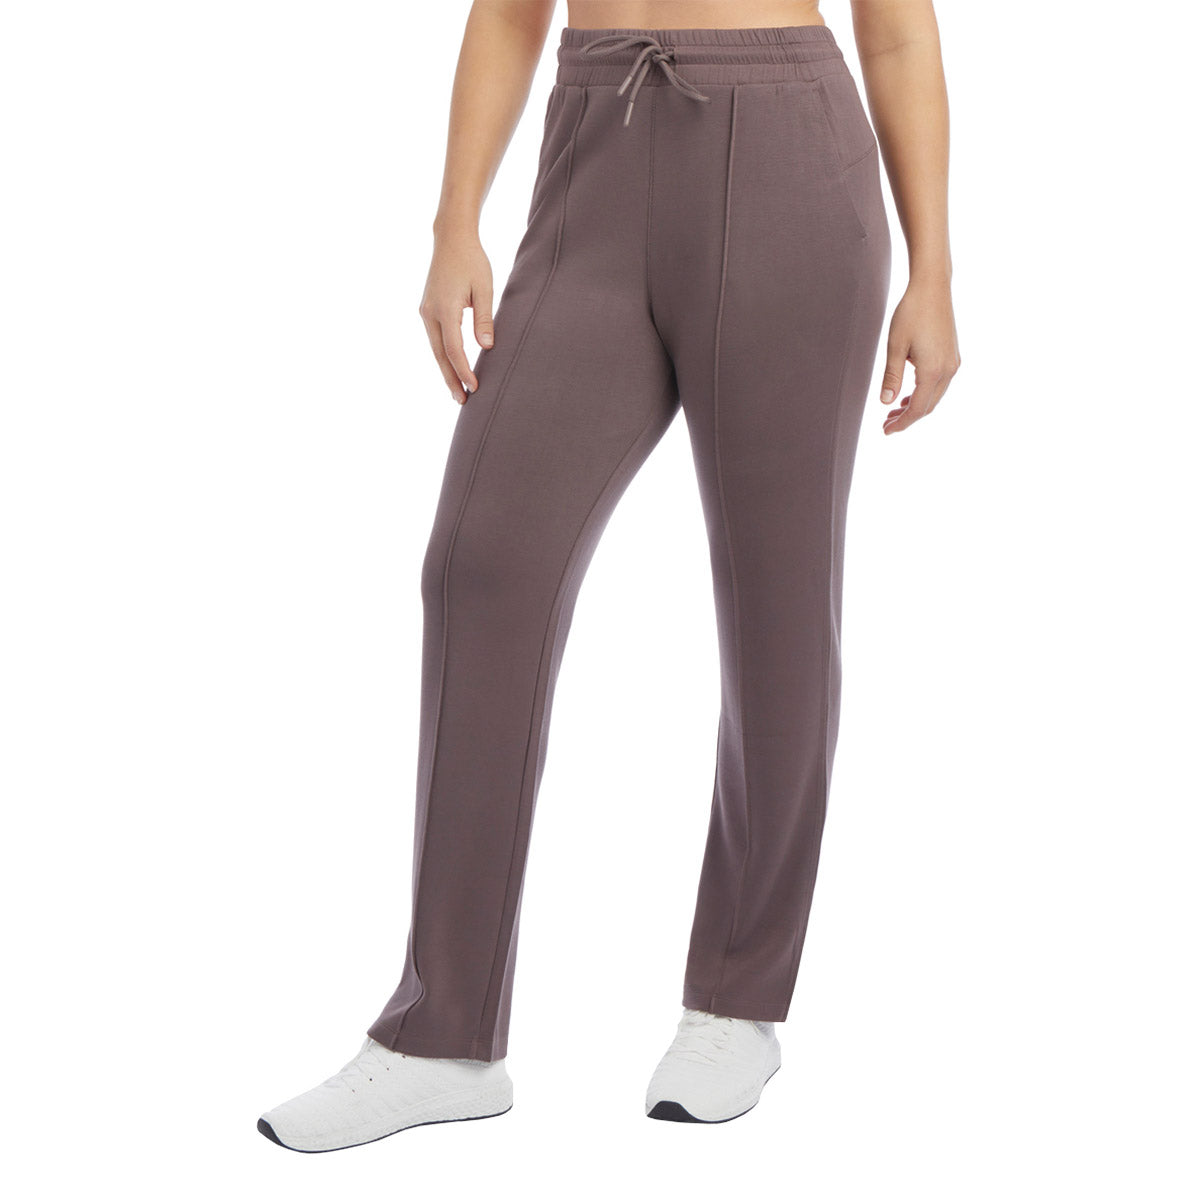 Jockey Crosswaist High Rise Yoga Pants, Women's Size XL, Portland Plum NEW